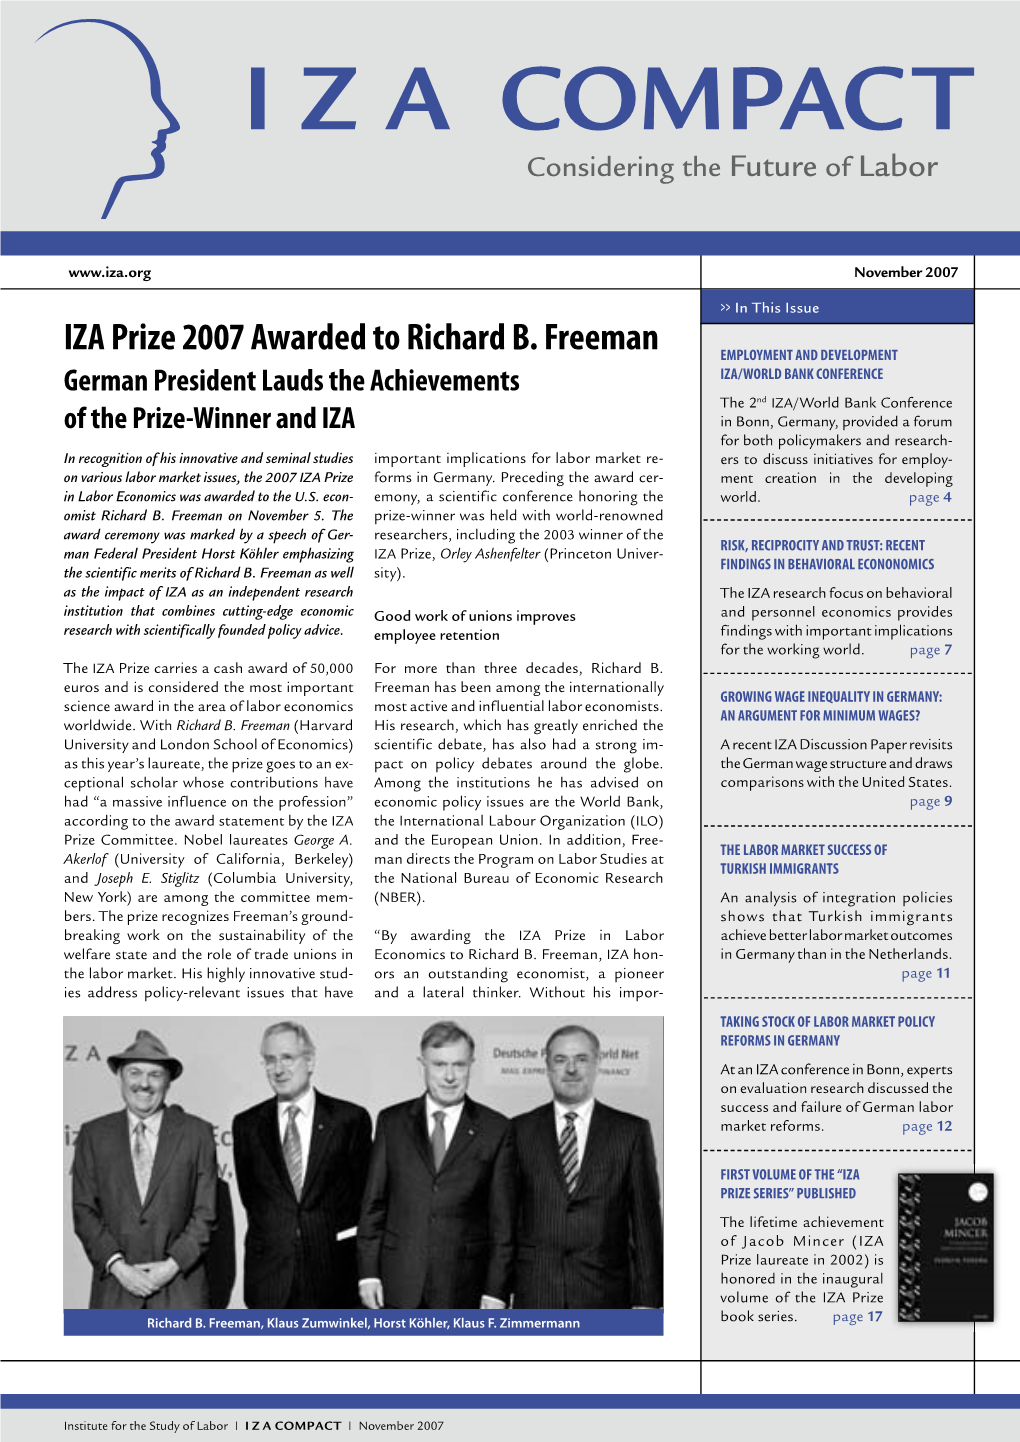 IZA COMPACT | November 2007